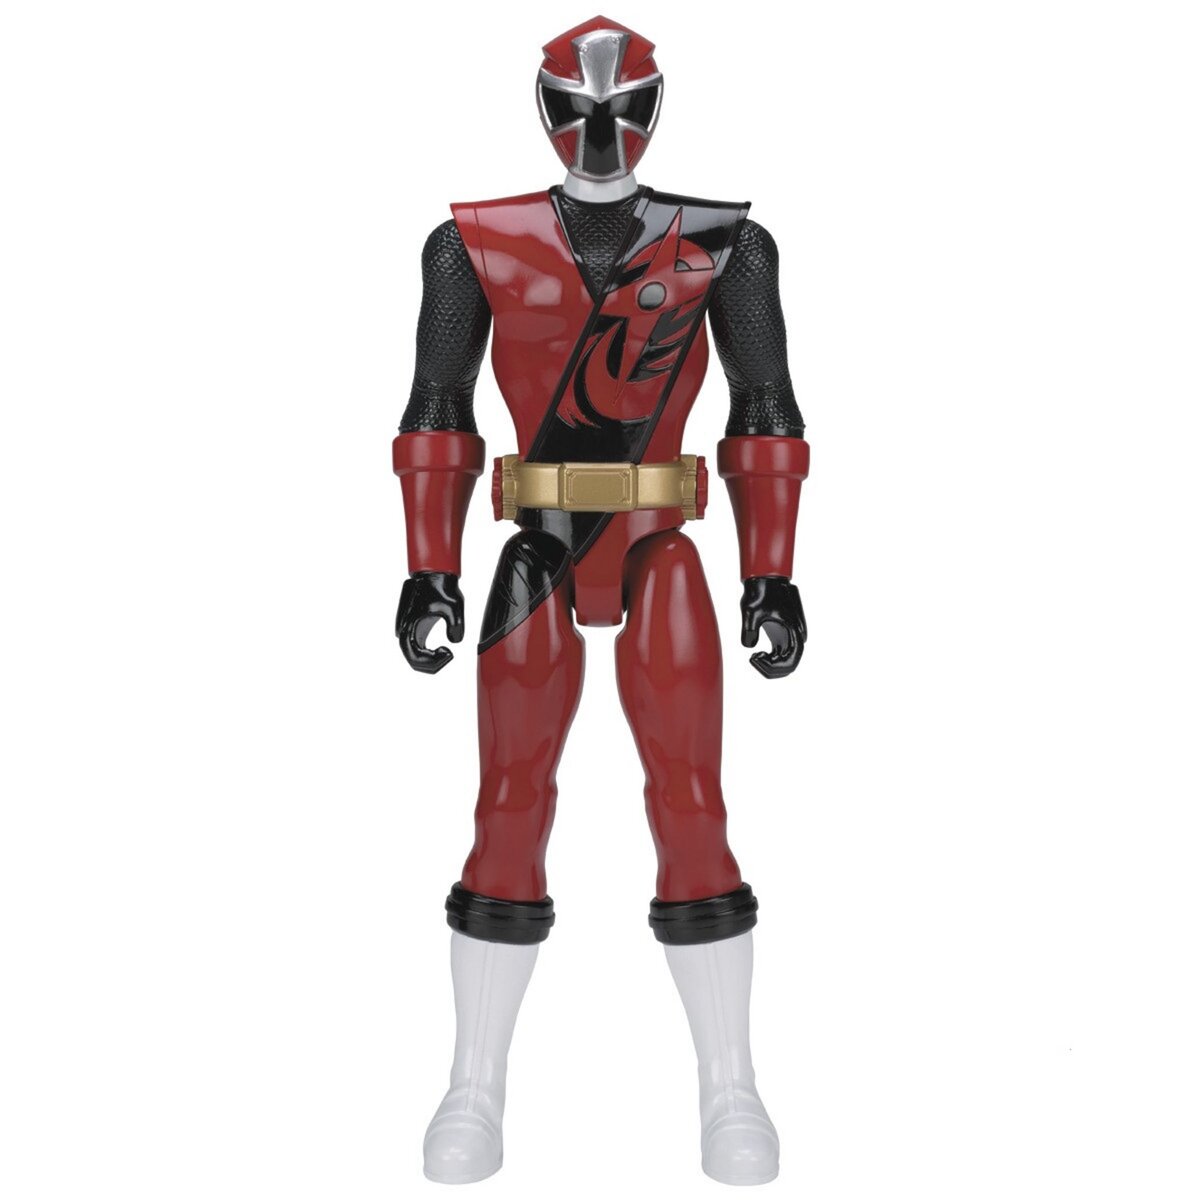 BANDAI Figurine 30cm Ninja Steel Power Rangers Rouge